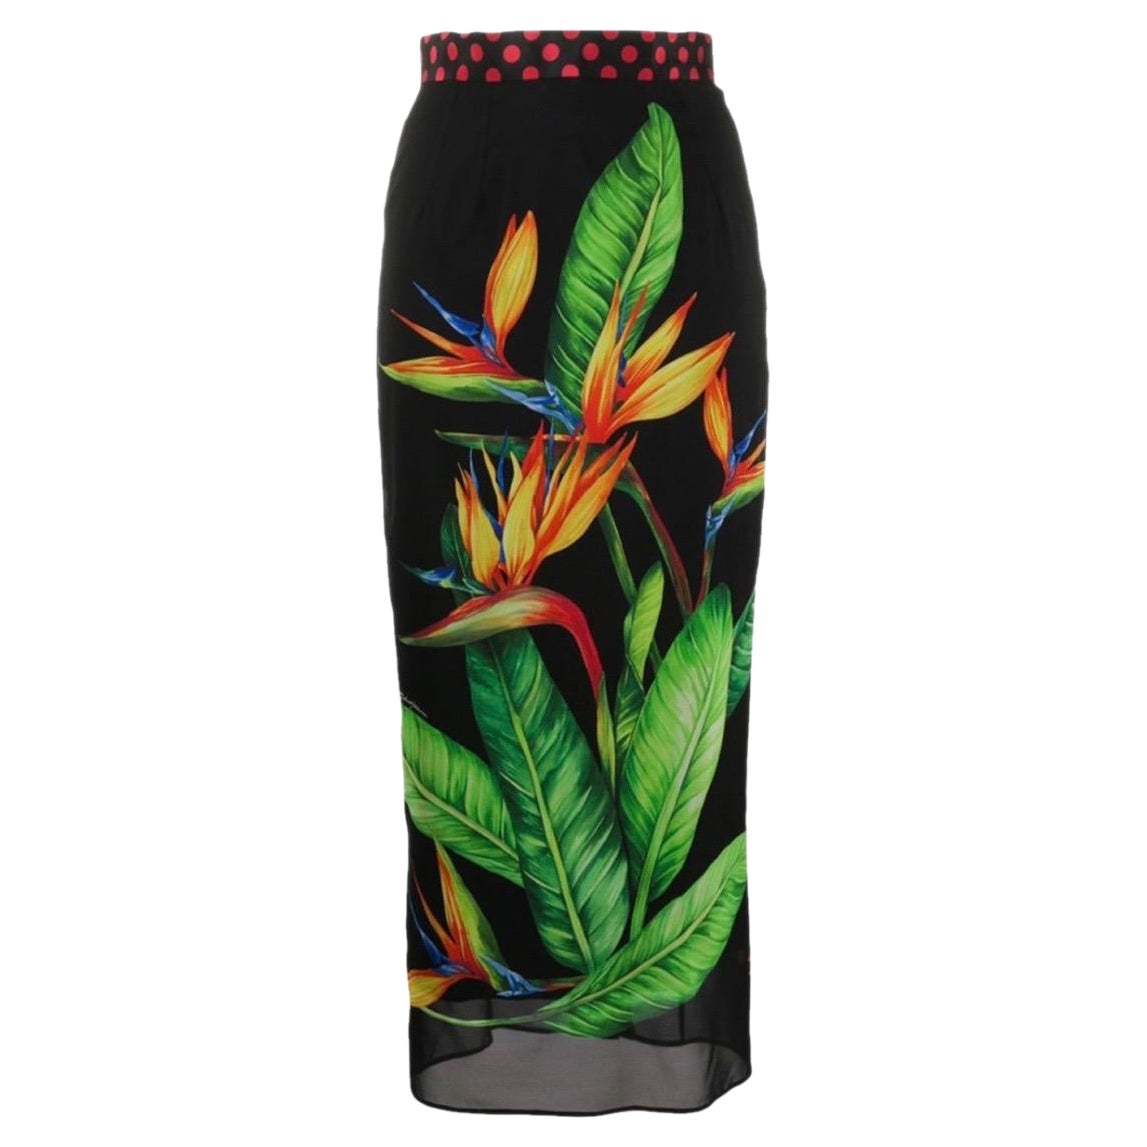 Dolce & Gabbana JUNGLE
COLLECTION RUNWAY PIECE
Silk mid length pencil skirt
